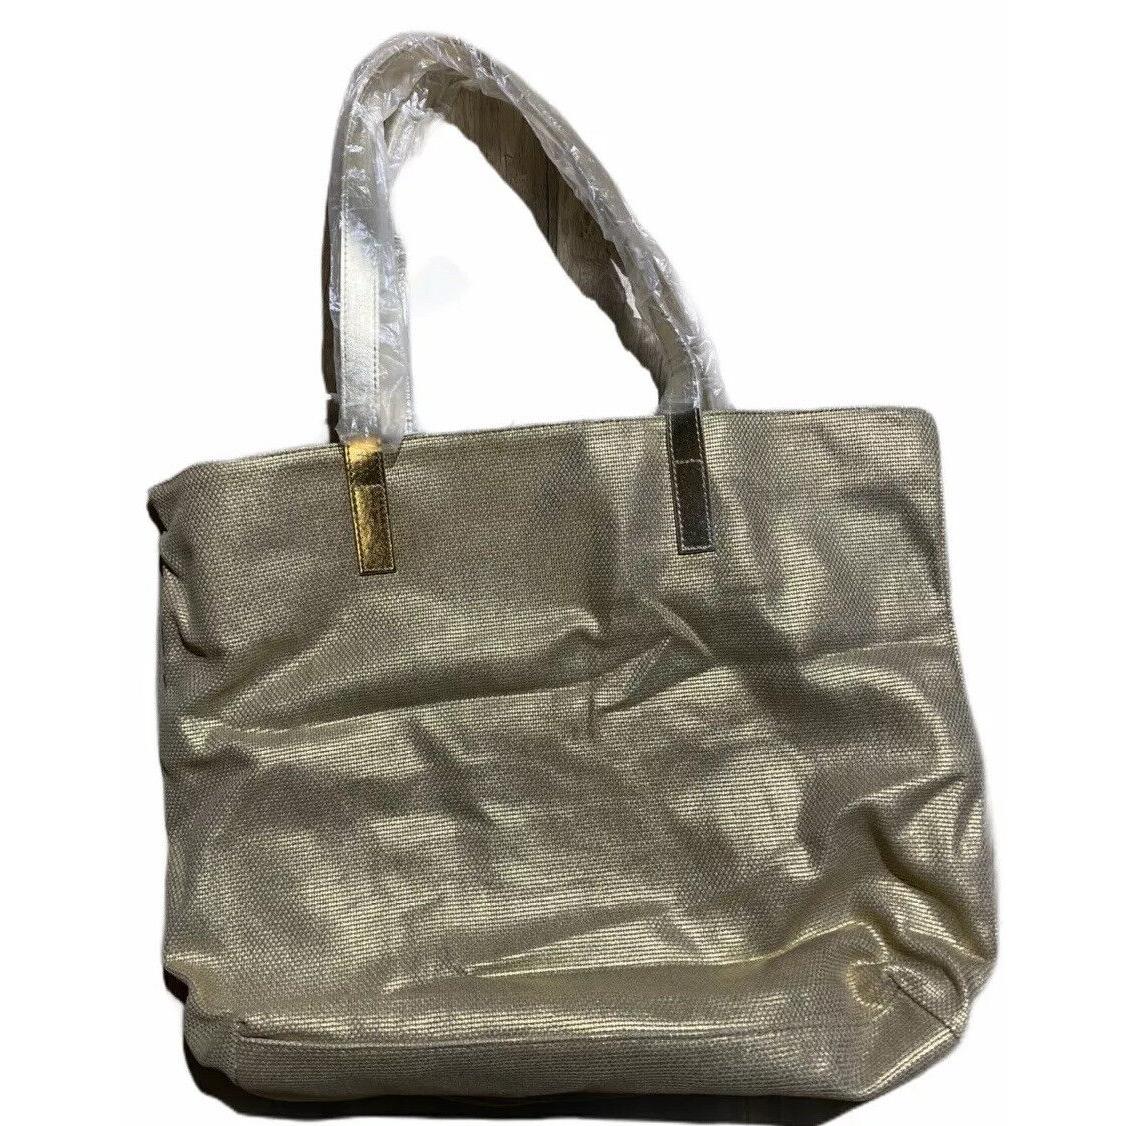 Michael Kors Parfums Shimmer Gold Bag Purse Tote Shopping Travel Handbag